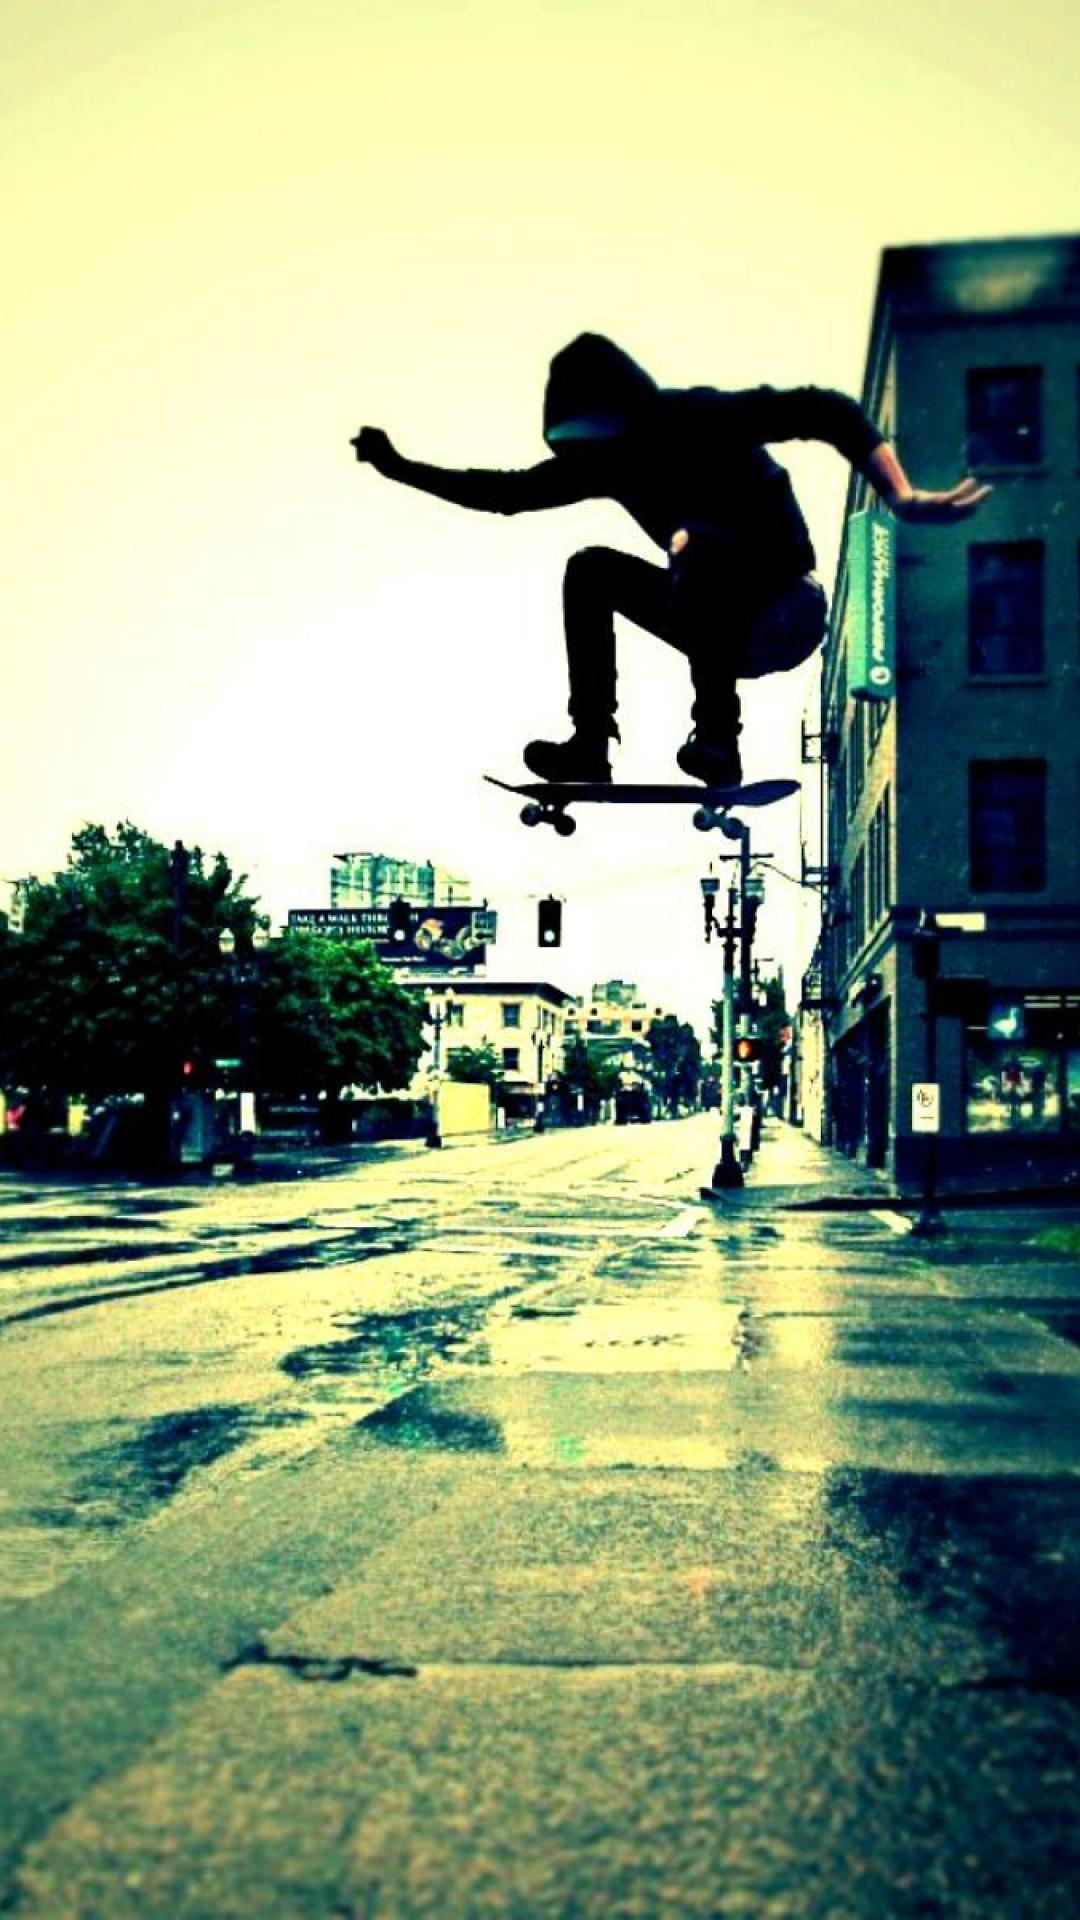 skate wallpaper,skateboarding,kickflip,skateboard,cool,springen